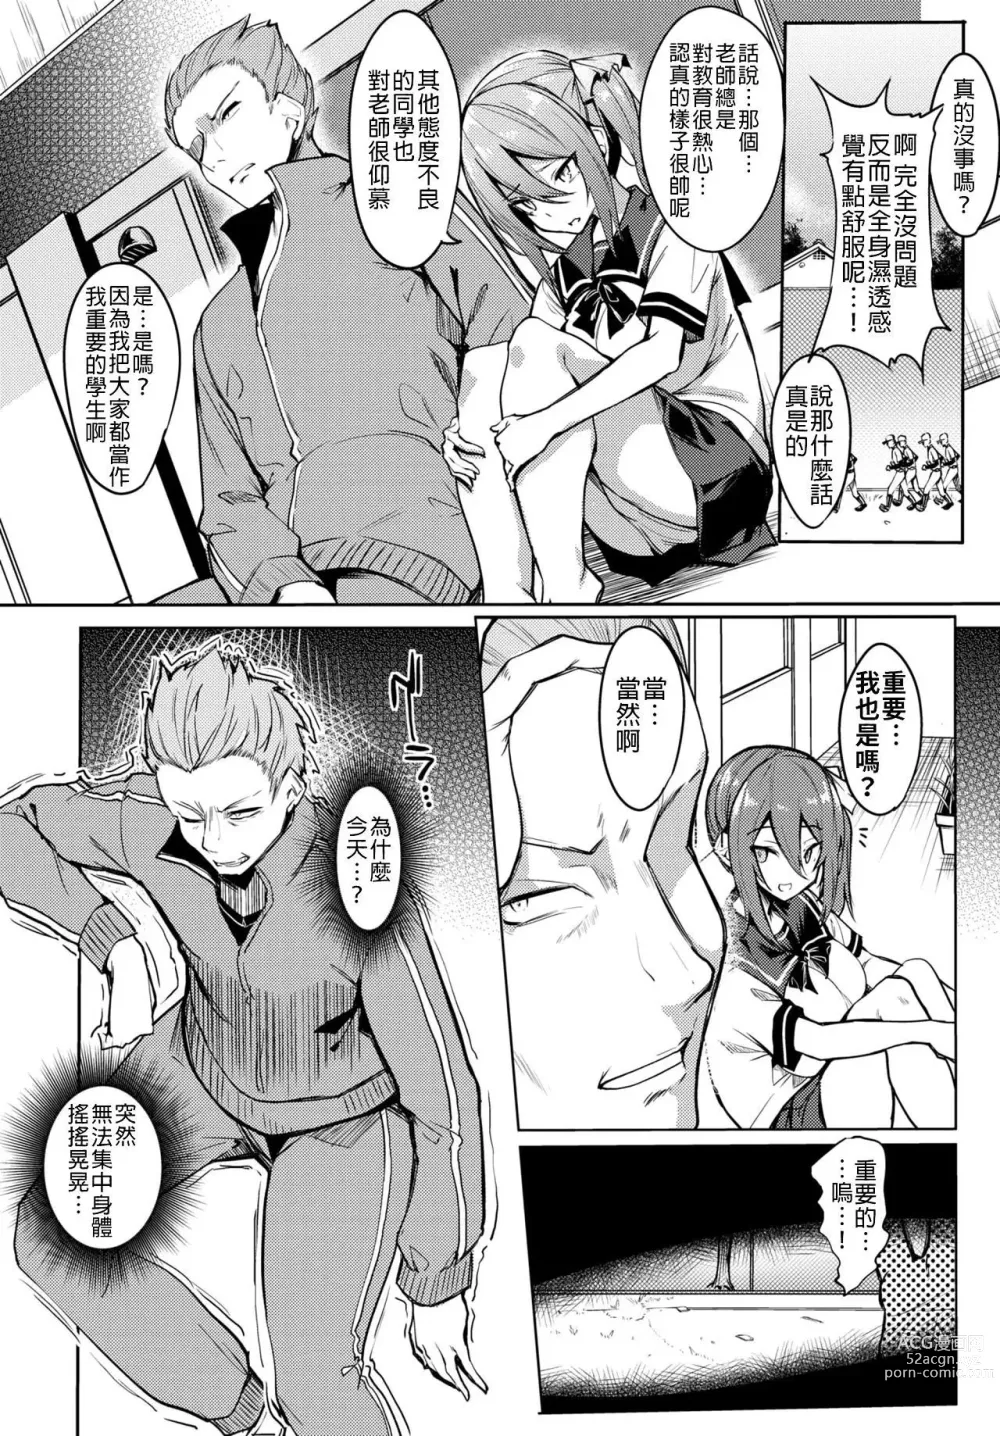 Page 6 of manga 黏呼呼的食譜 (uncensored)